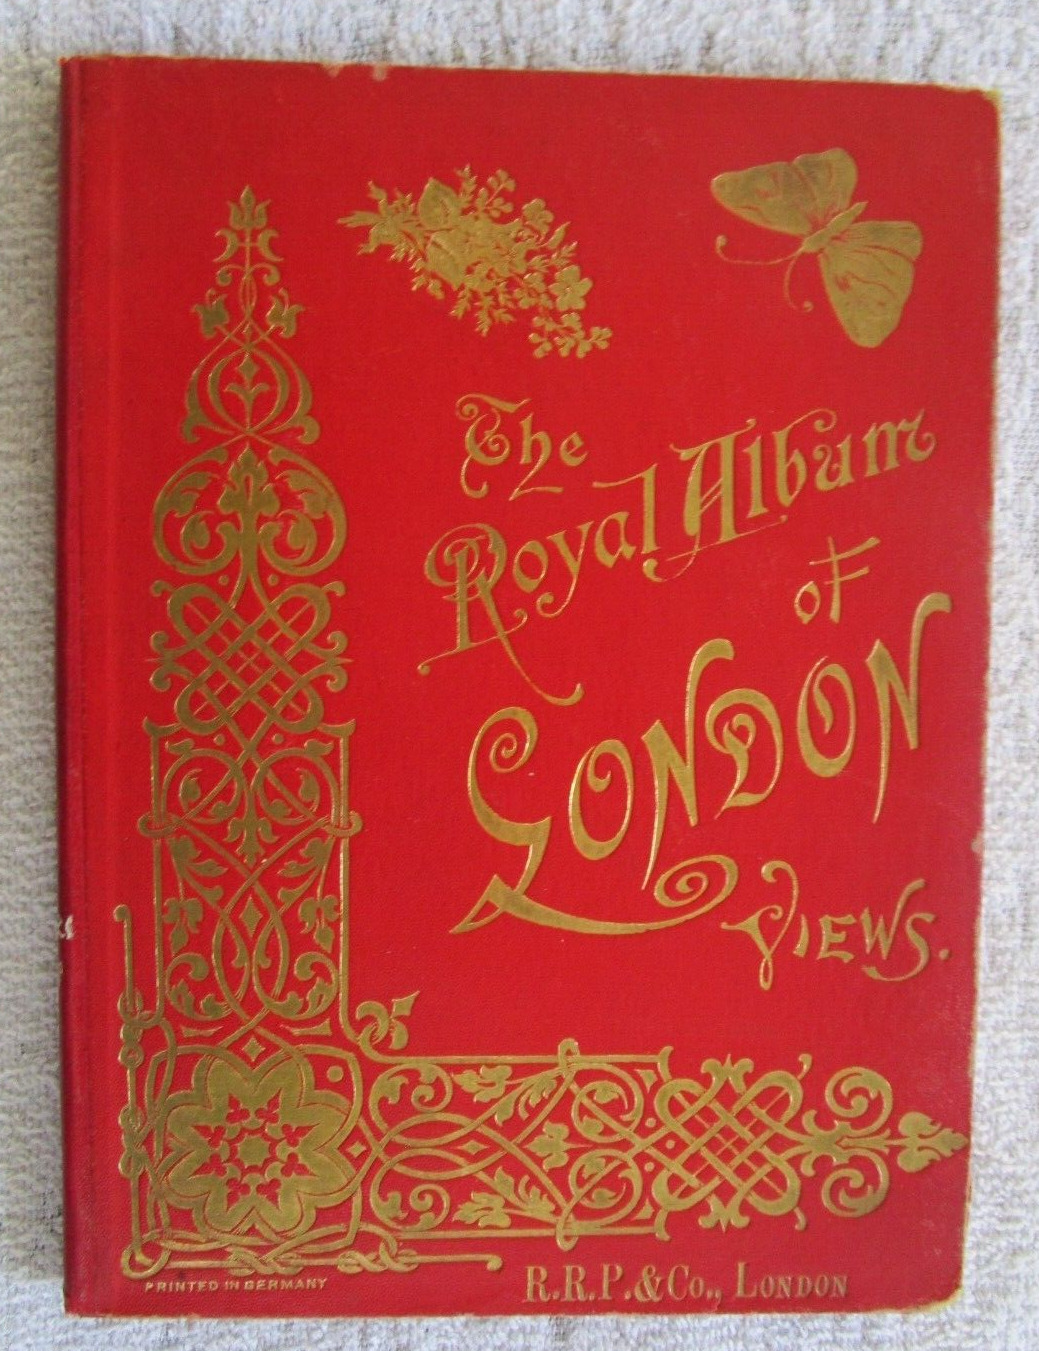 THE ROYAL ALBUM OF LONDON VIEWS - Early Souvenir Book - 1880's